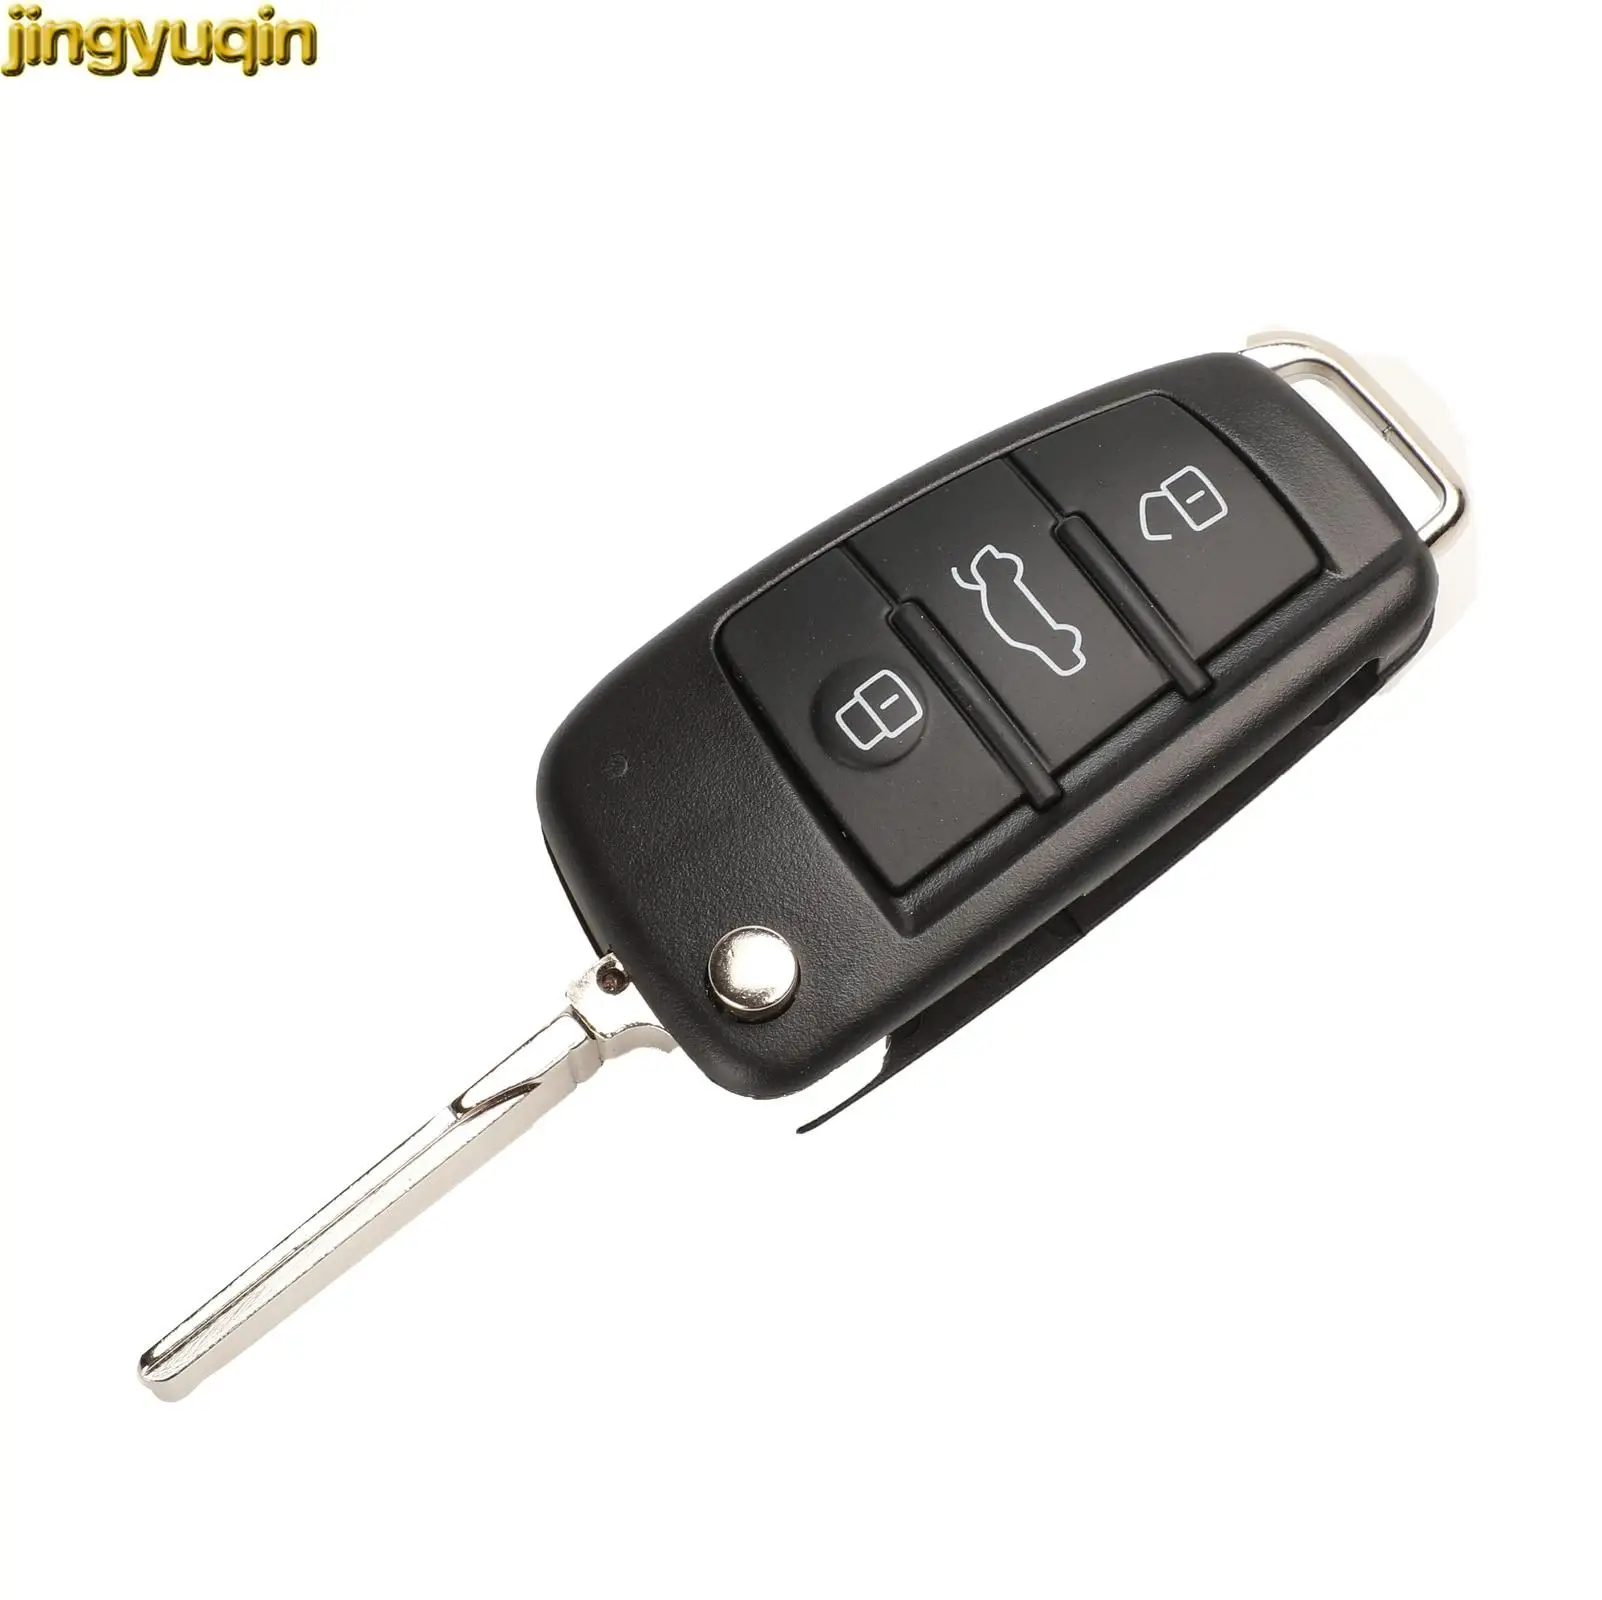 

Jingyuqin Flip Remote Car Key Fob Shell For Audi A1 A3 A4 A6 A8 A4L A6L TT Allroad Q2L Q3 Q5 Q7 R8 S6 SQ5 RS4 C5 C6 B6 B7 2018